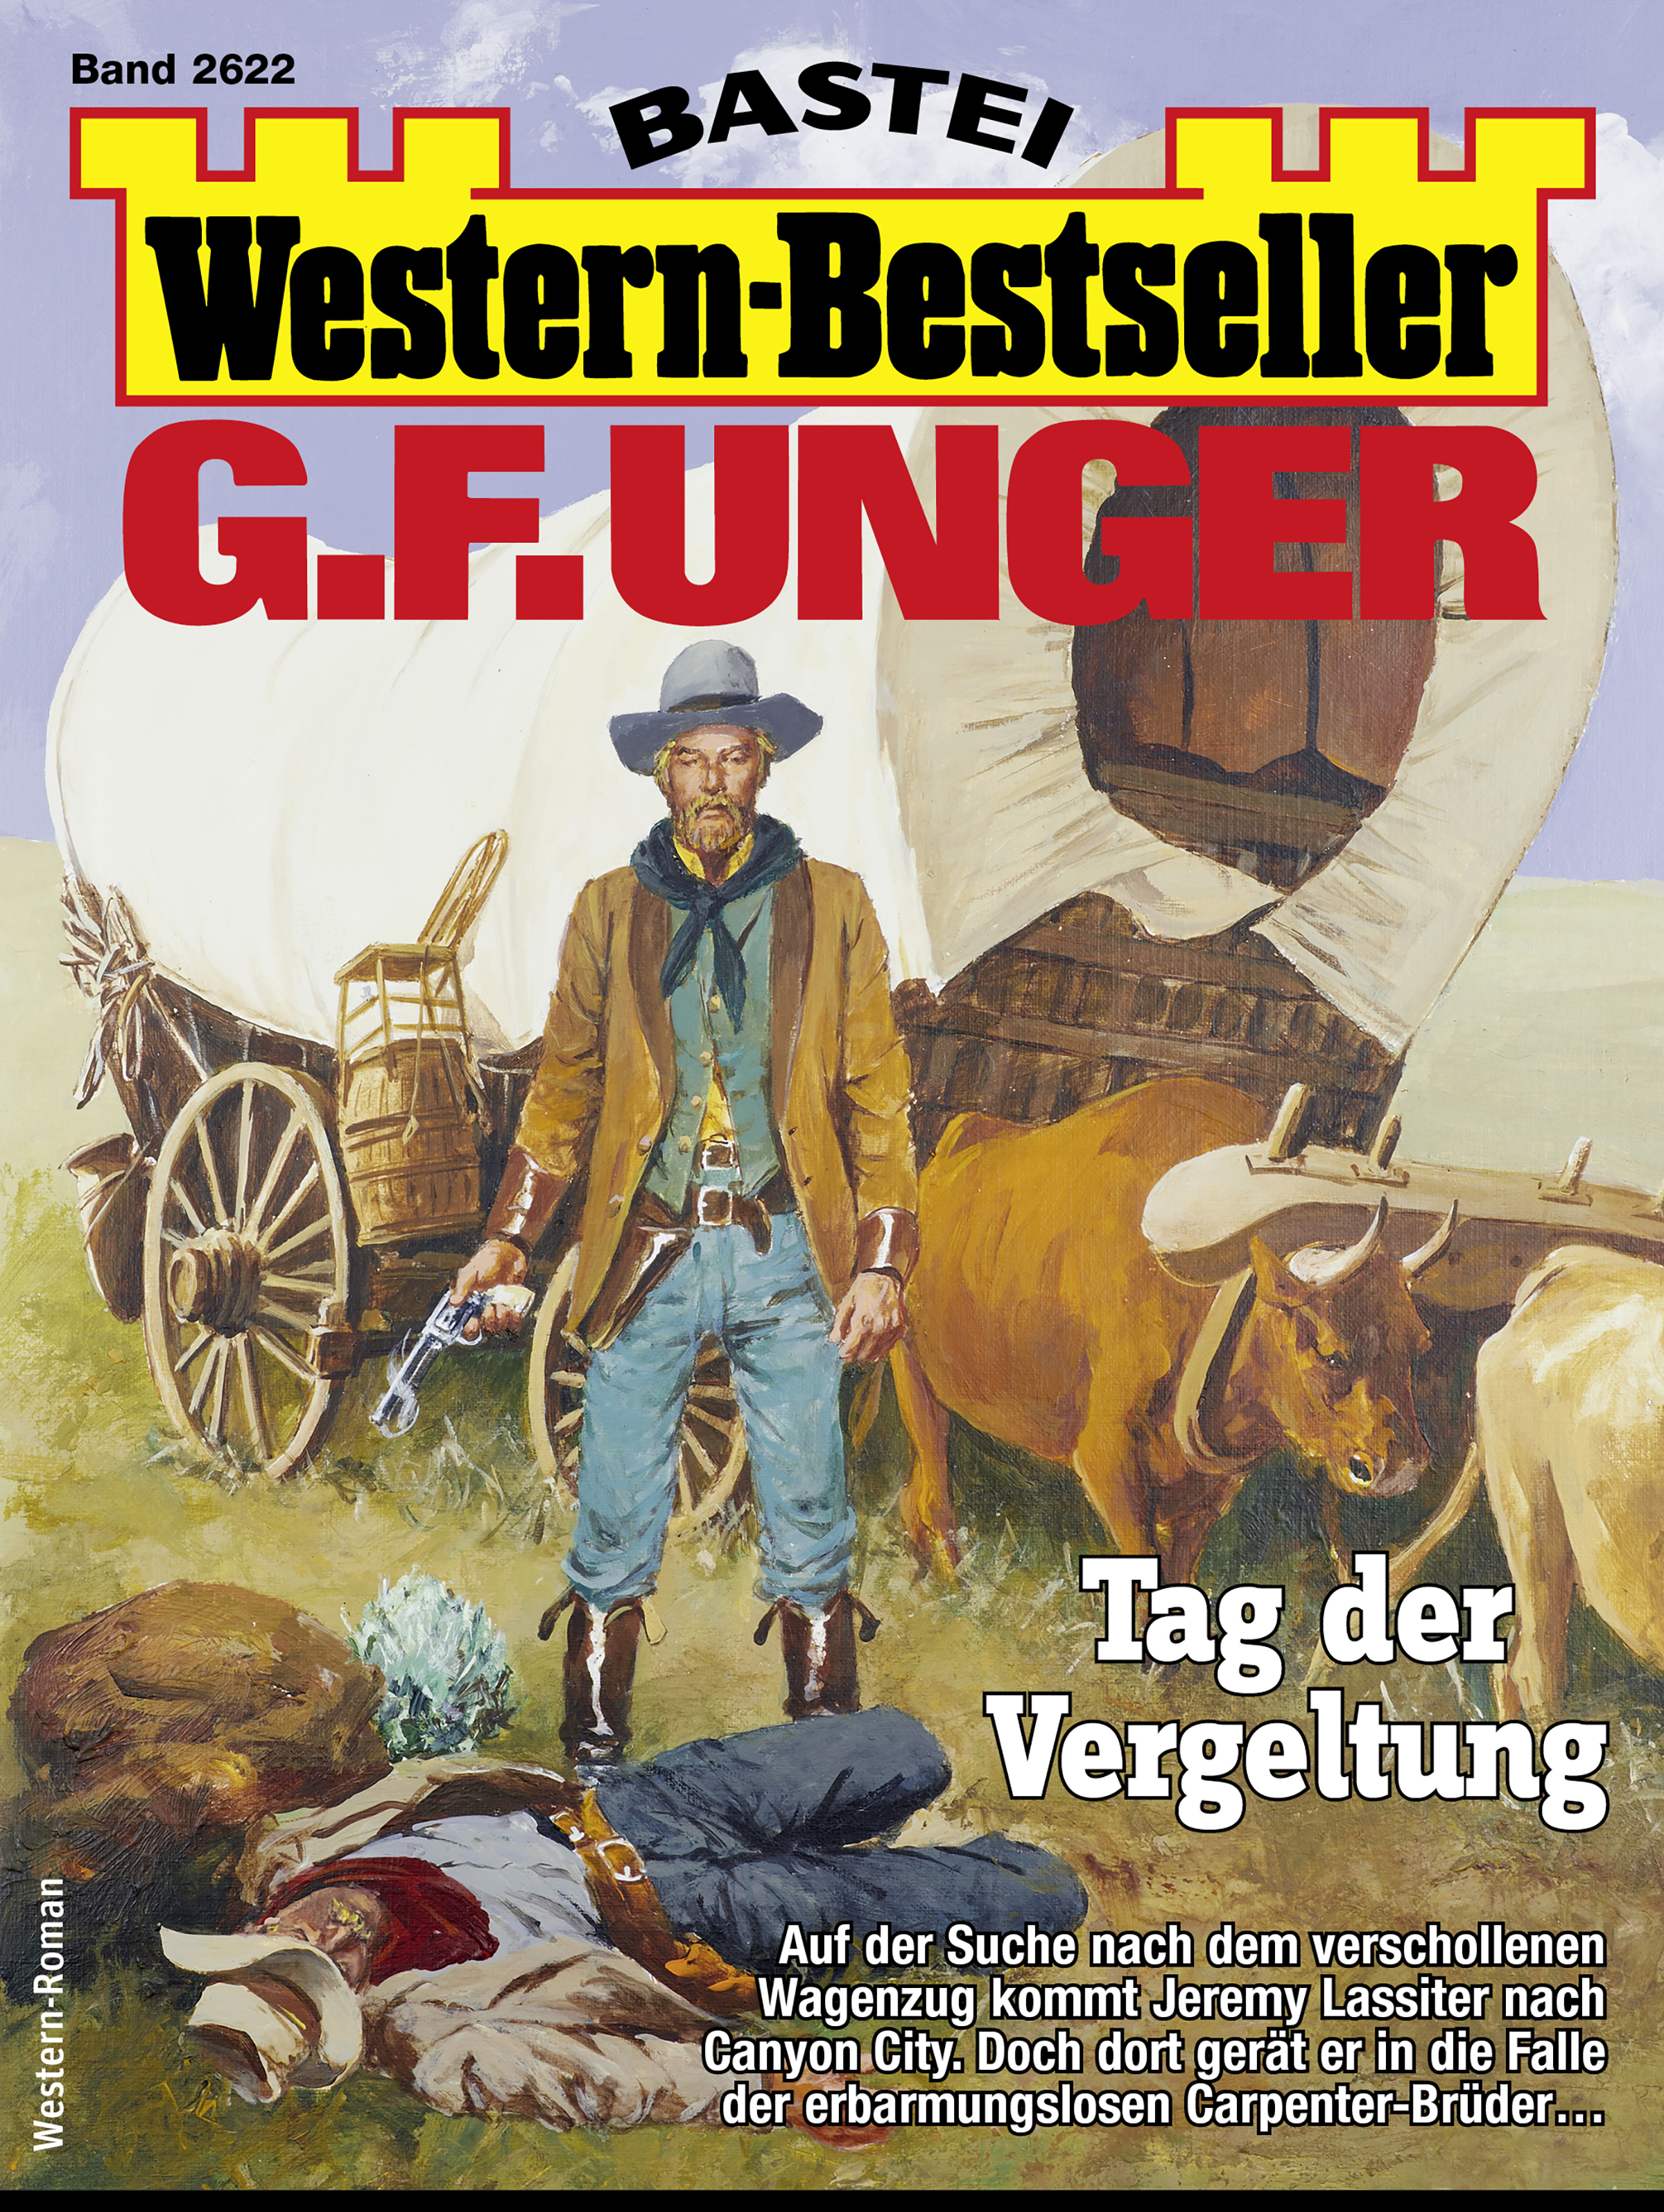 G. F. Unger Western-Bestseller 2622